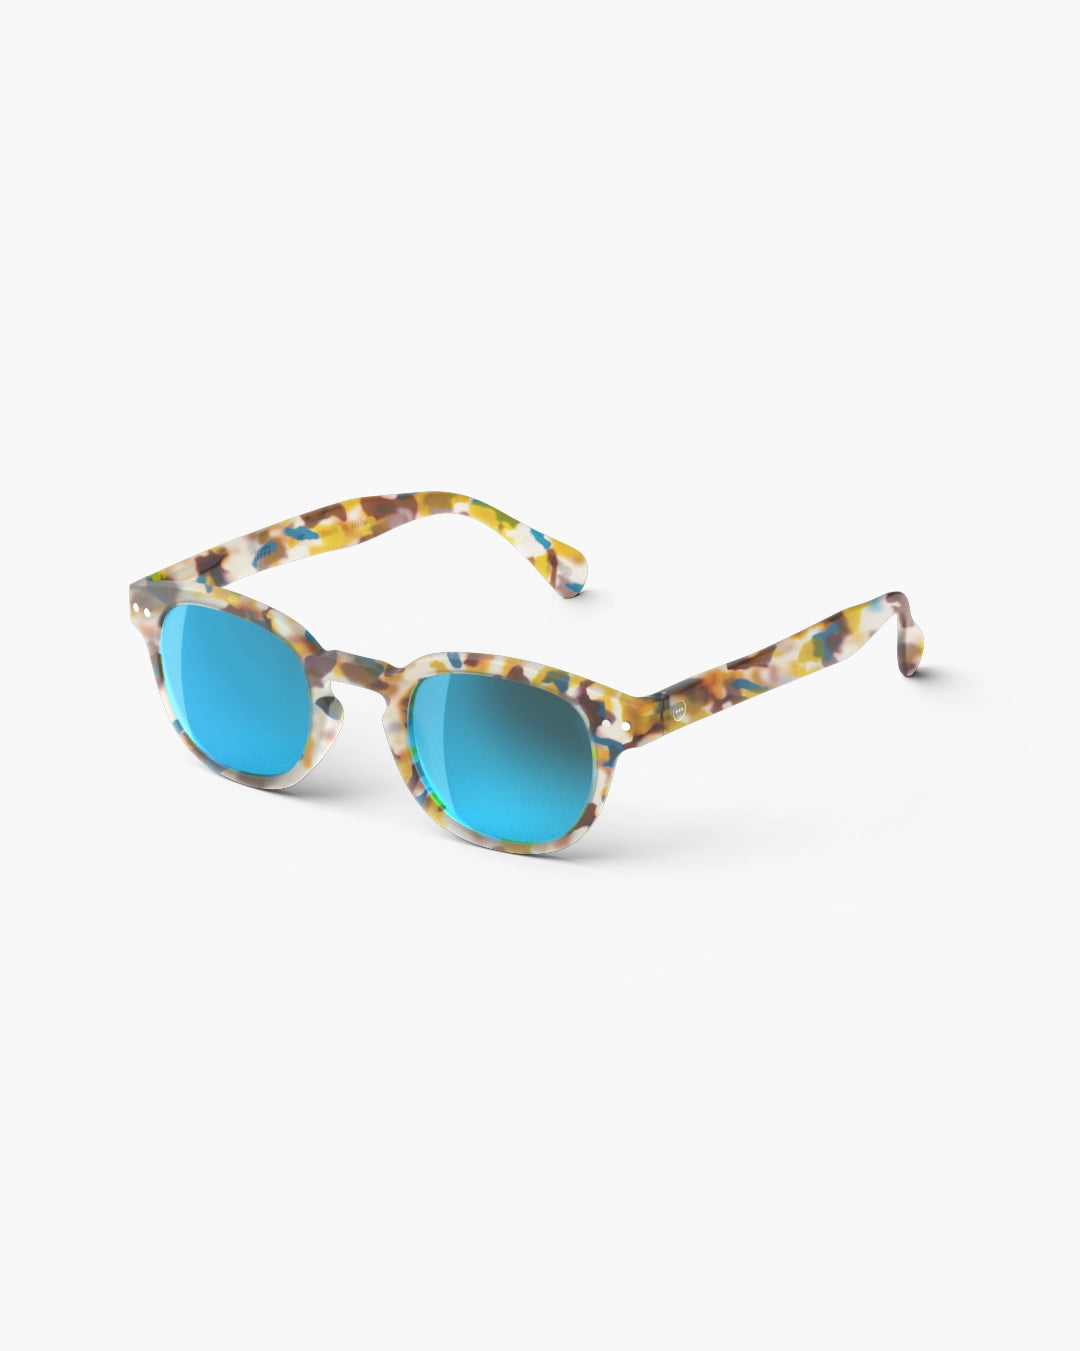 Sunglasses ‘Blue Tortoise’ Mirror Lens #C